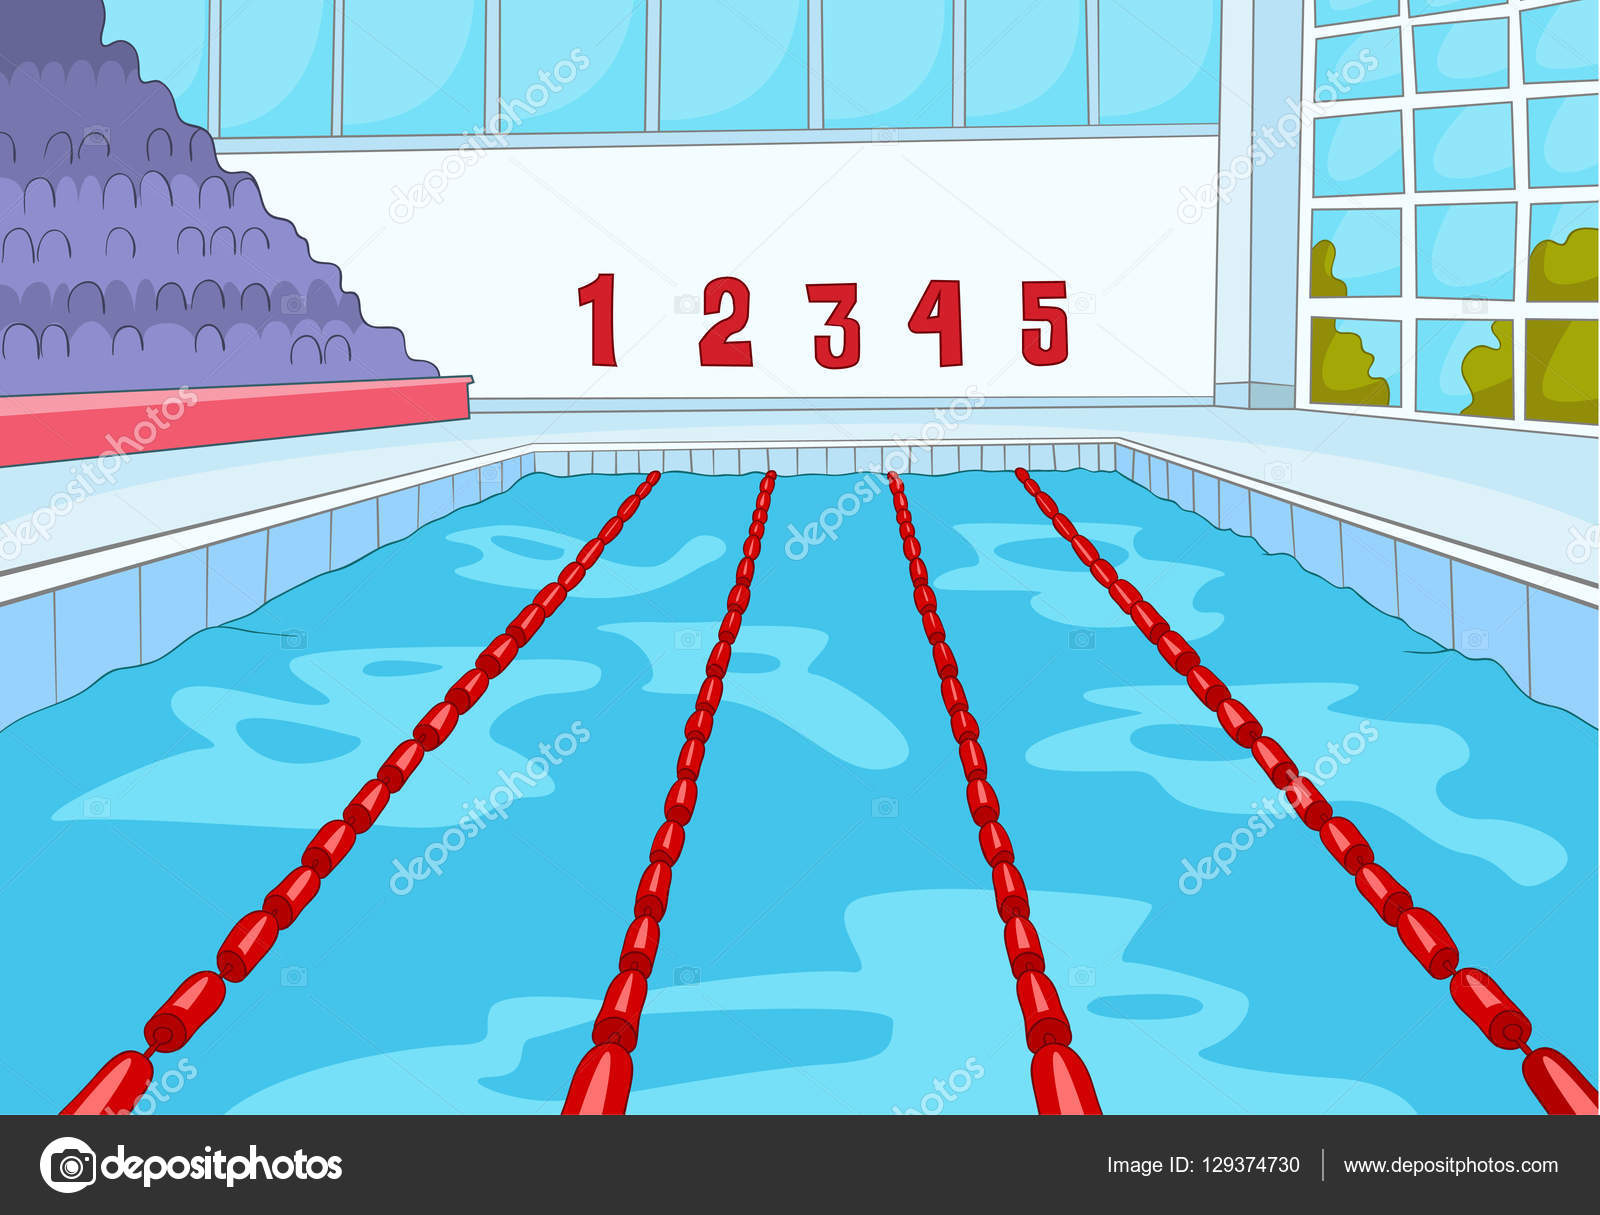 Cartoon background of swimming pool. Stock Photo by ©VisualGeneration  129374730